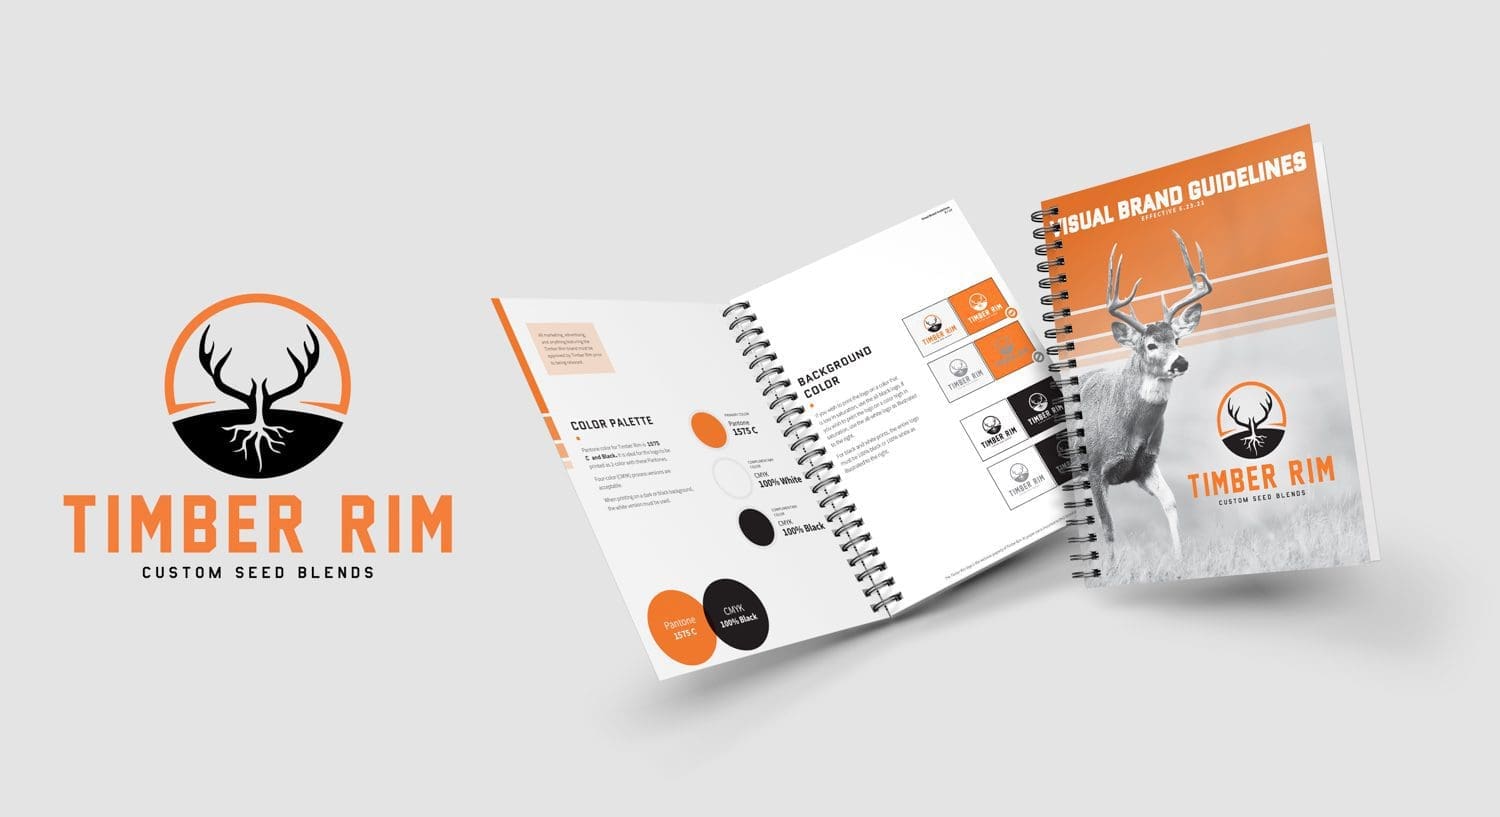 Timber Rim branding guidelines booklet